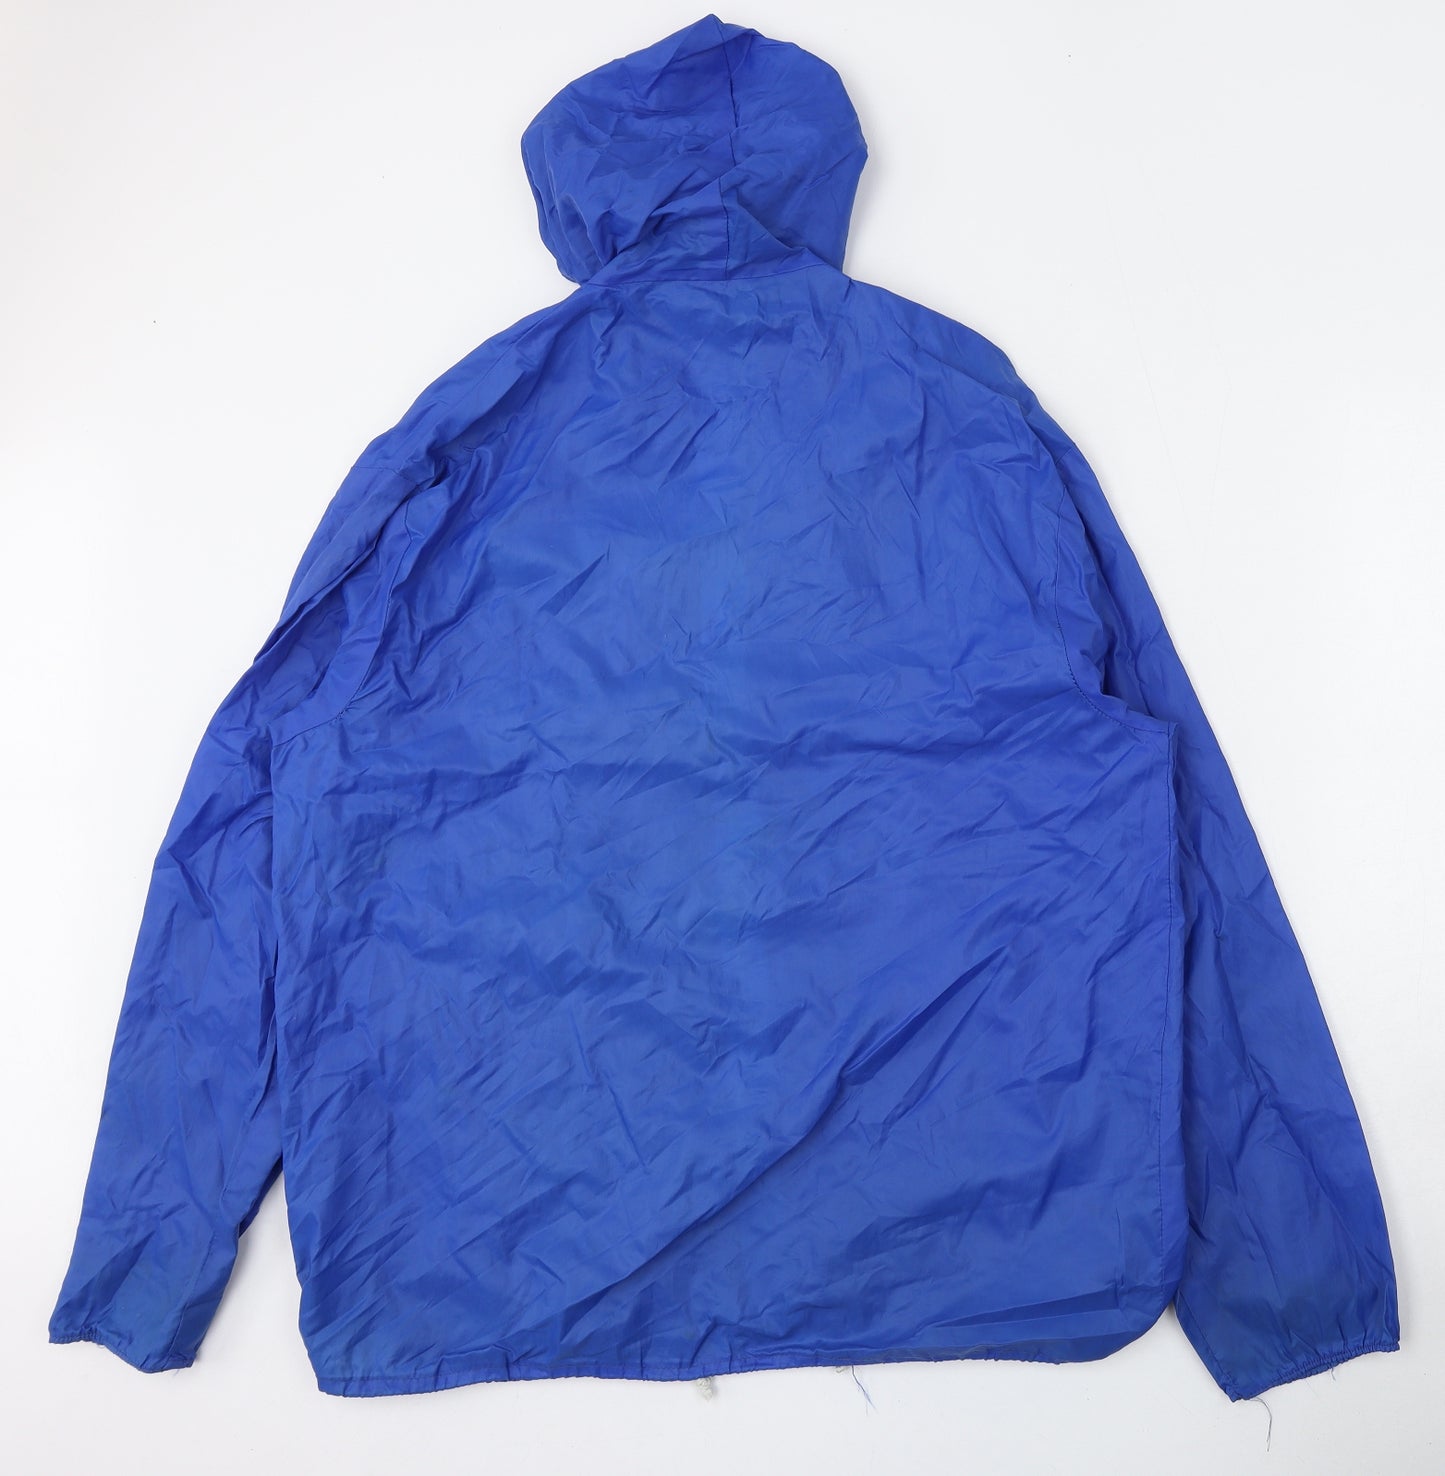 Preworn Mens Blue   Anorak Jacket Size L  Zip